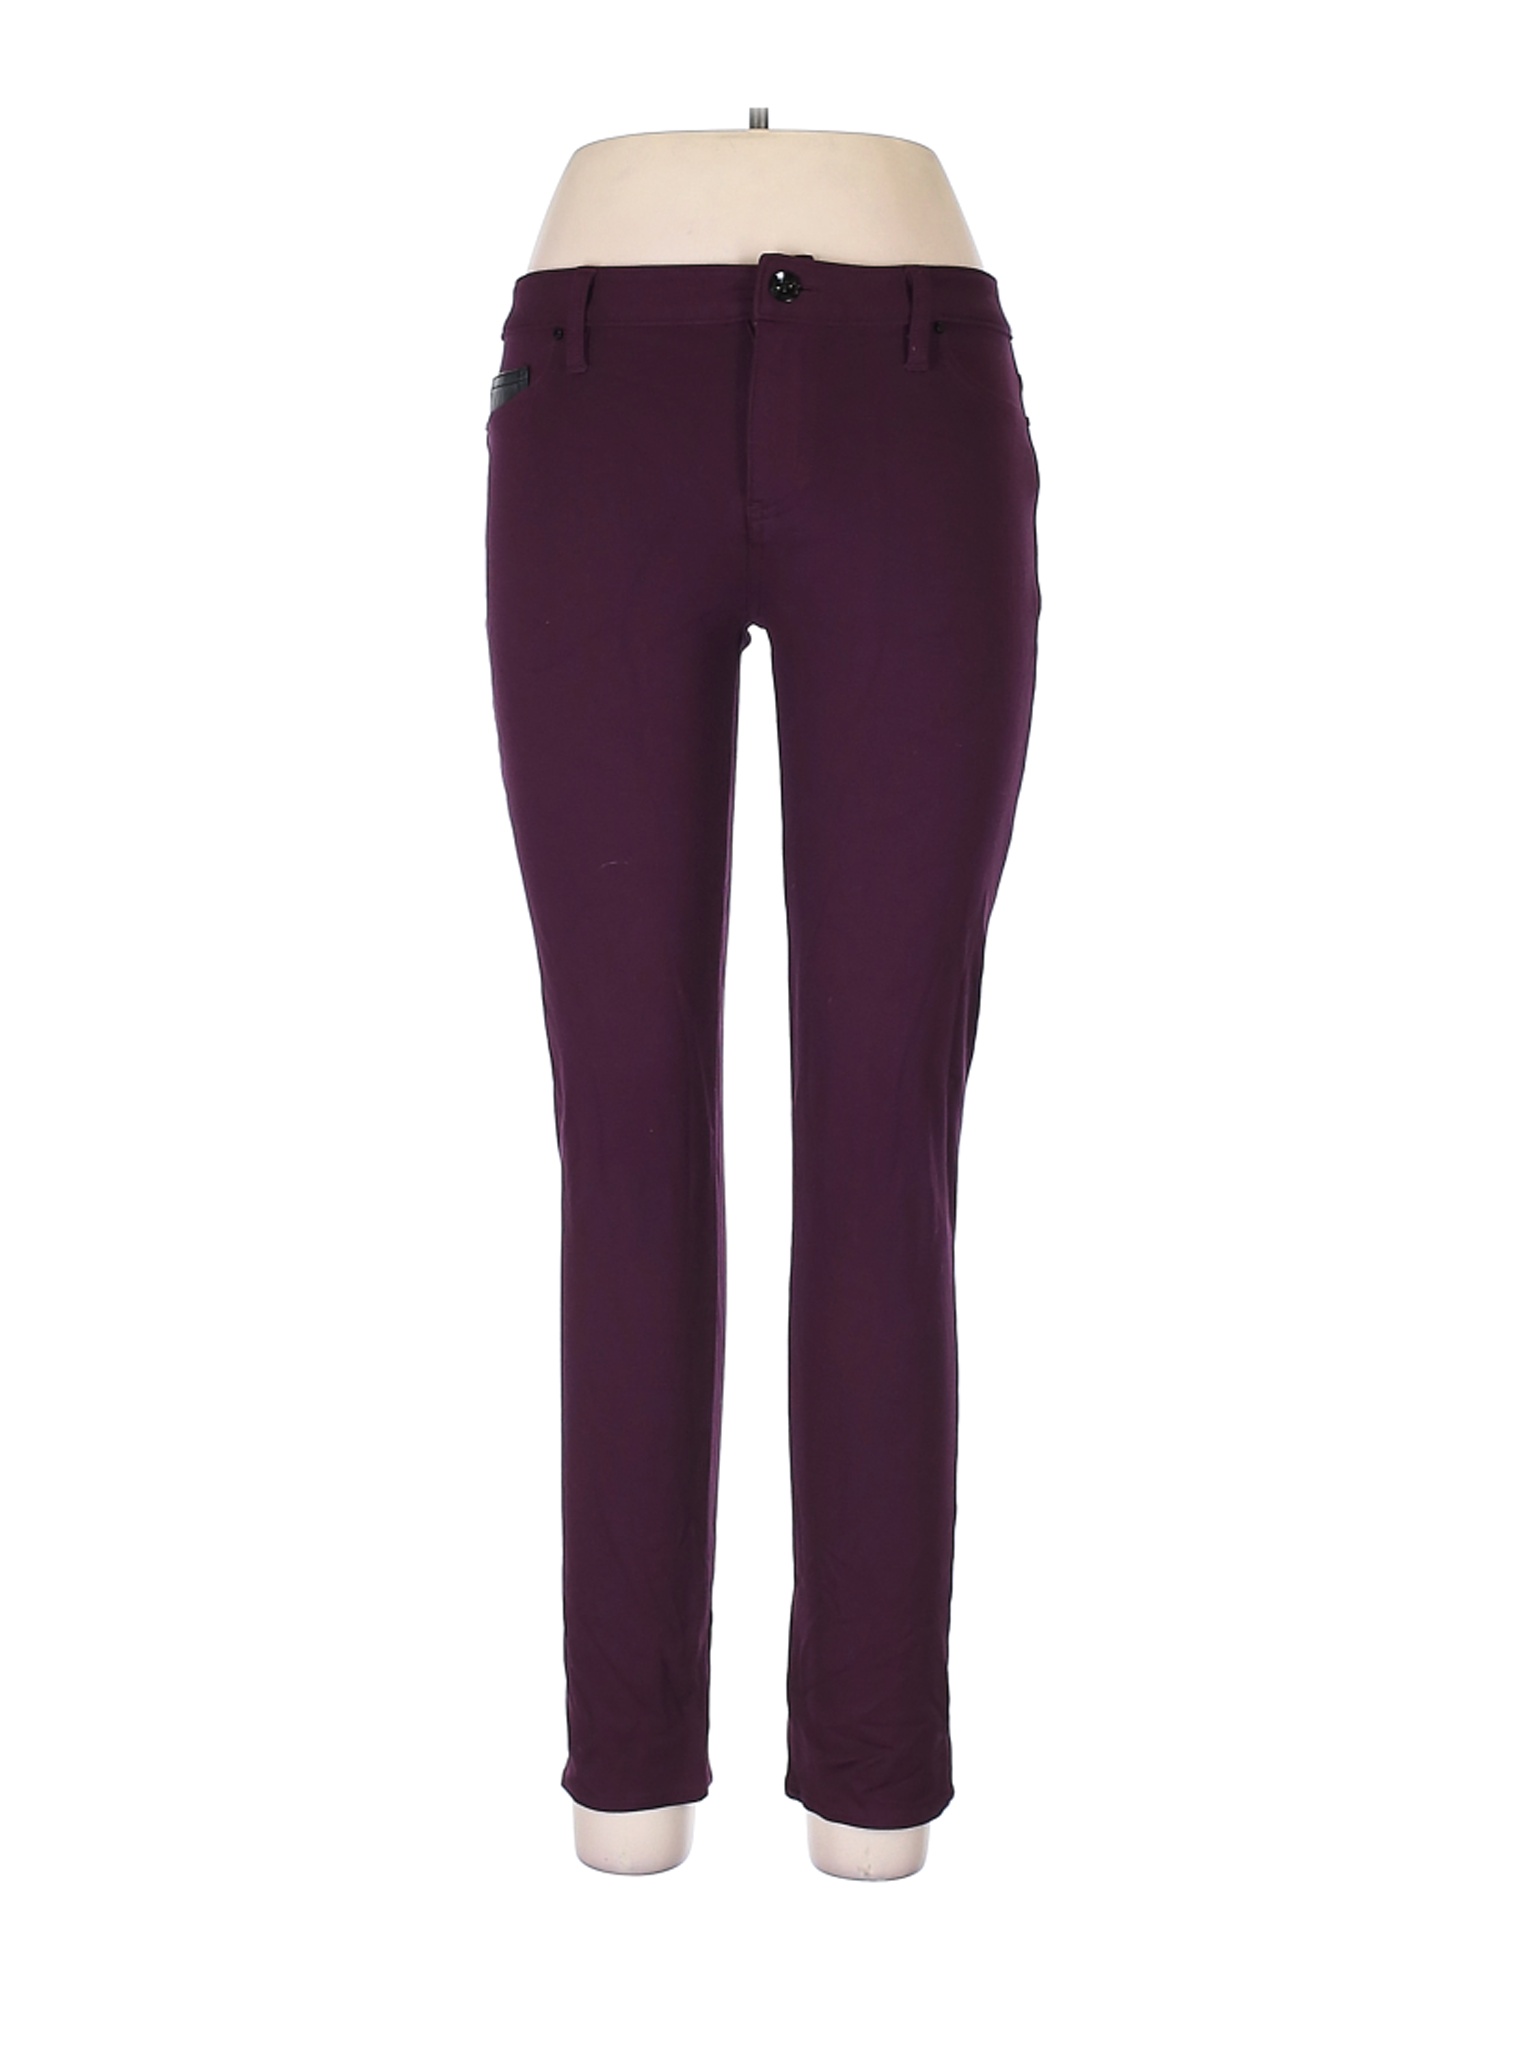 Calvin Klein Women Purple Casual Pants 10 | eBay